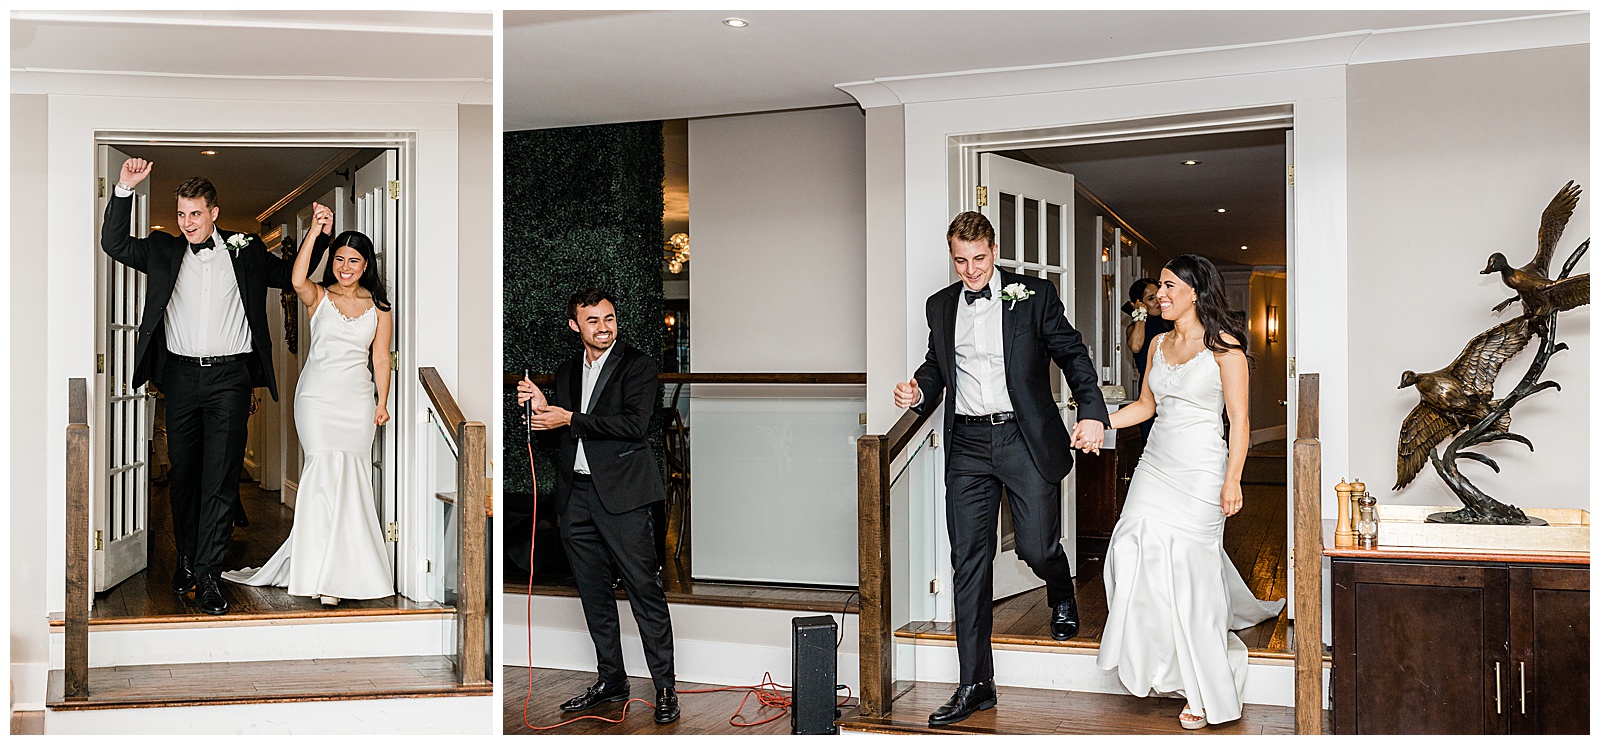 bride-and-groom-wedding-reception-kristina-staal-photography-roger-sherman-inn.jpg